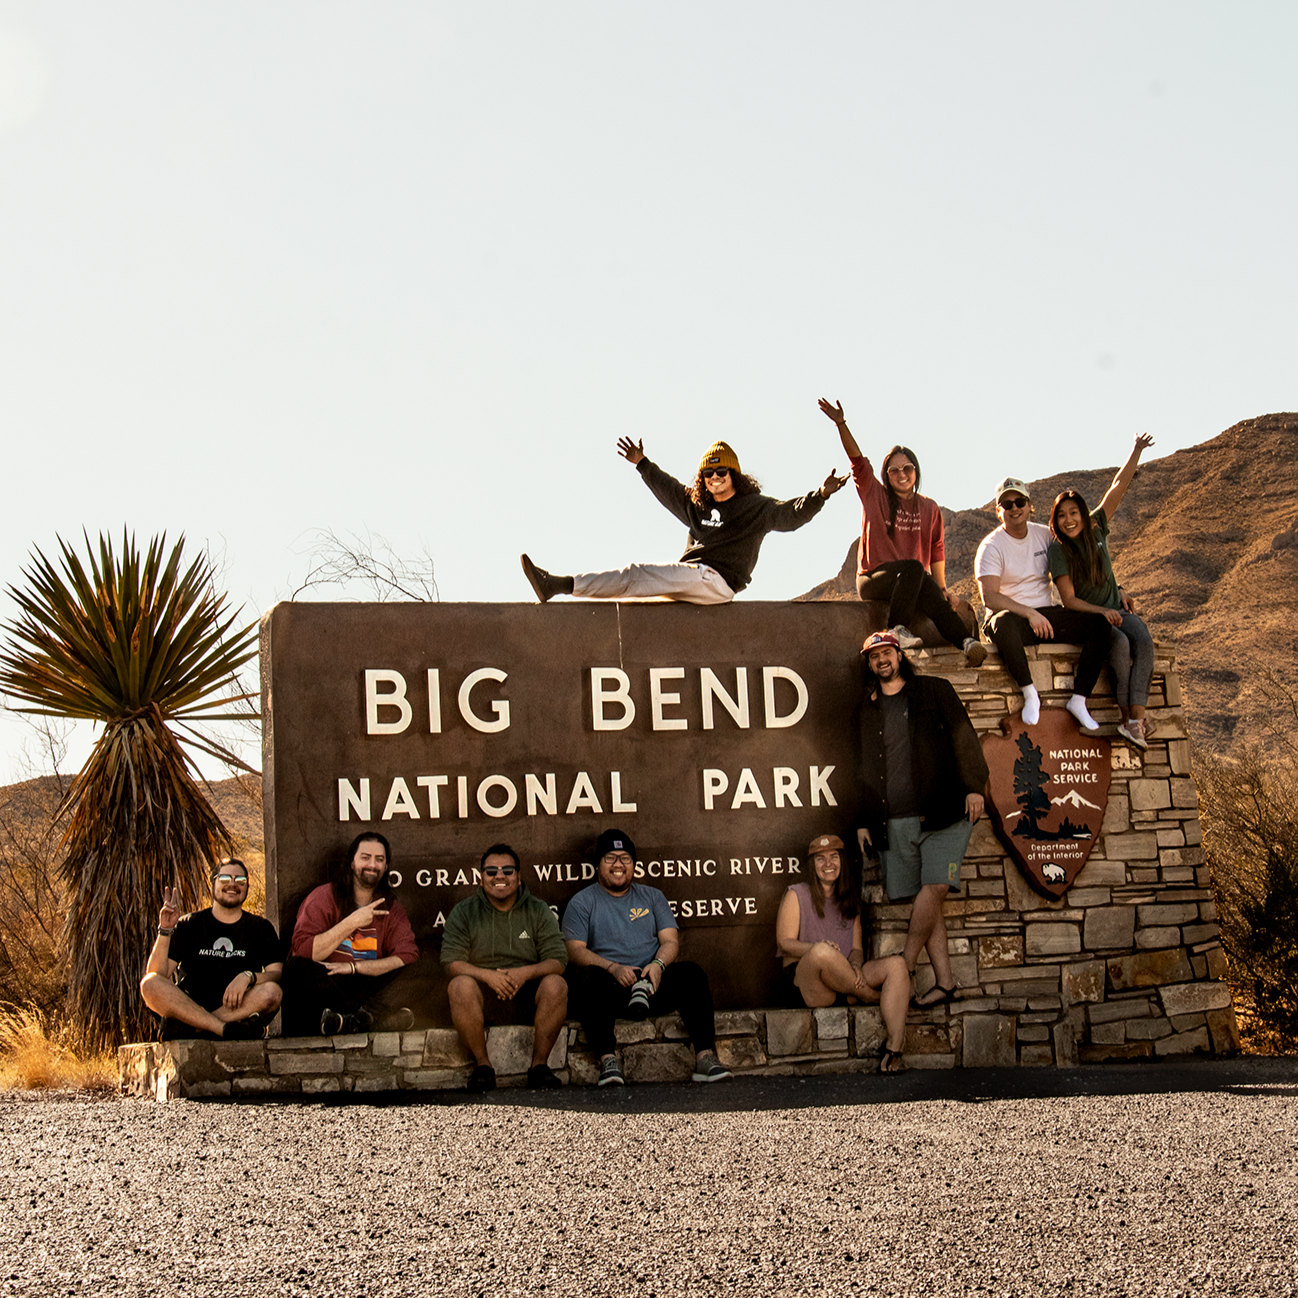 NatureBacks Crew taking a Photo with Big Bend National Park Sign